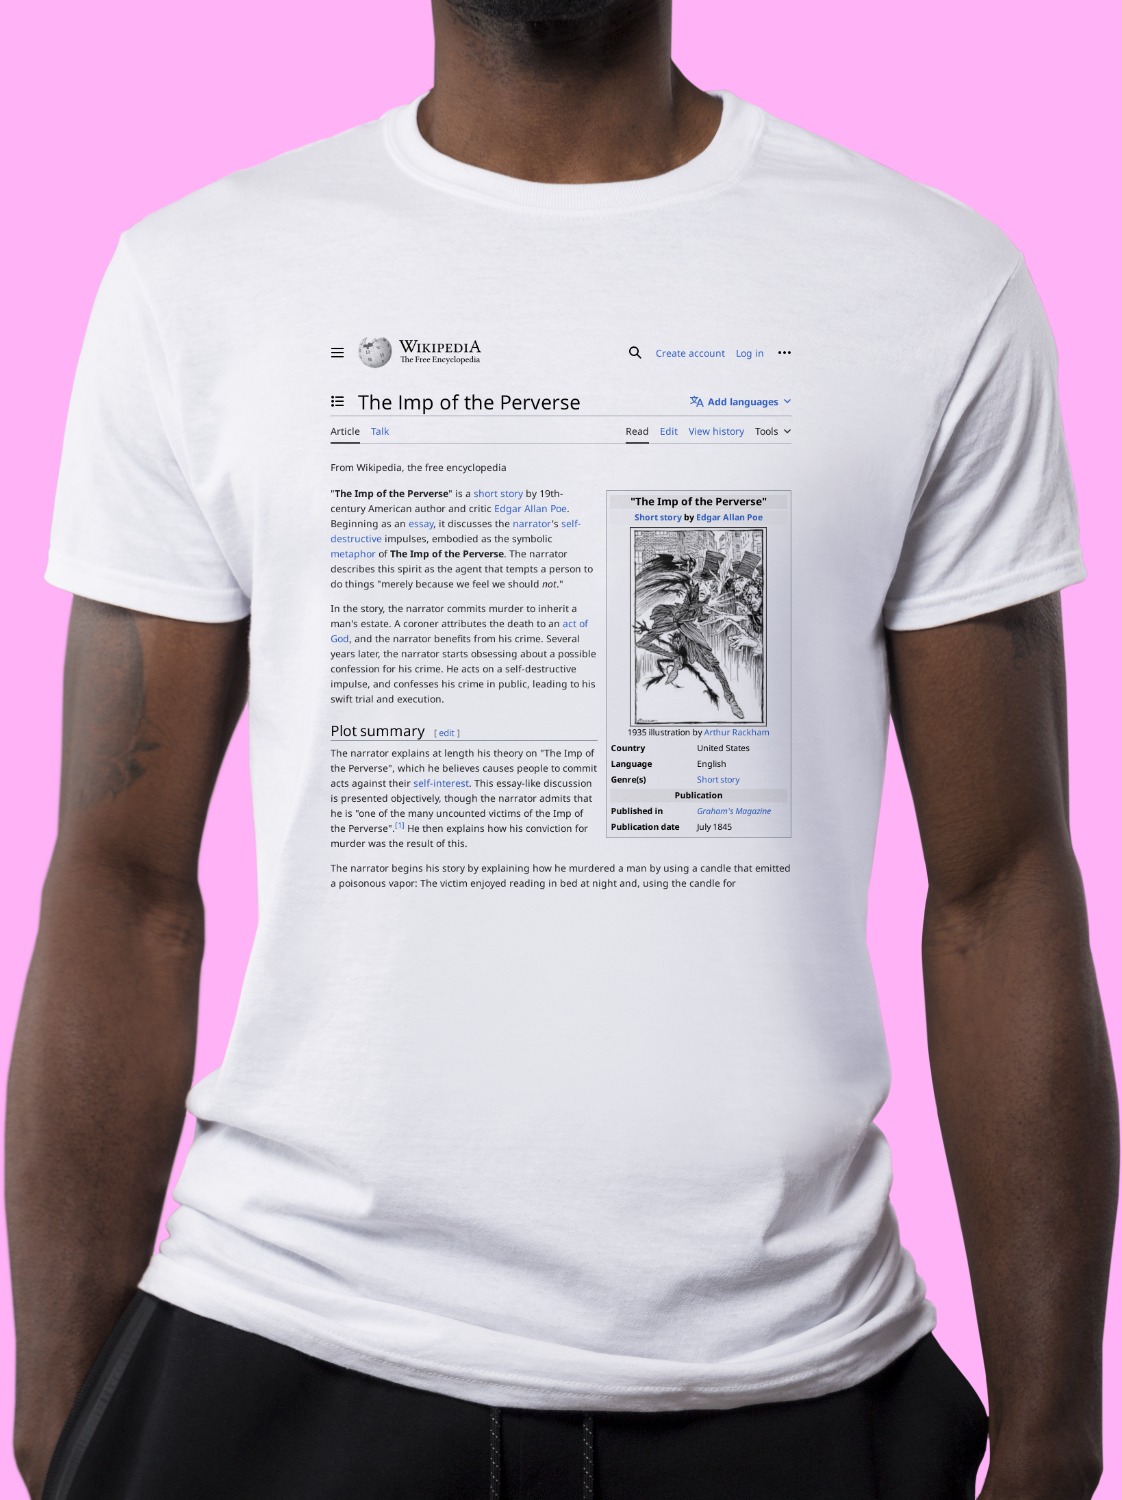 The_Imp_of_the_Perverse_(short_story) Wikipedia Shirt